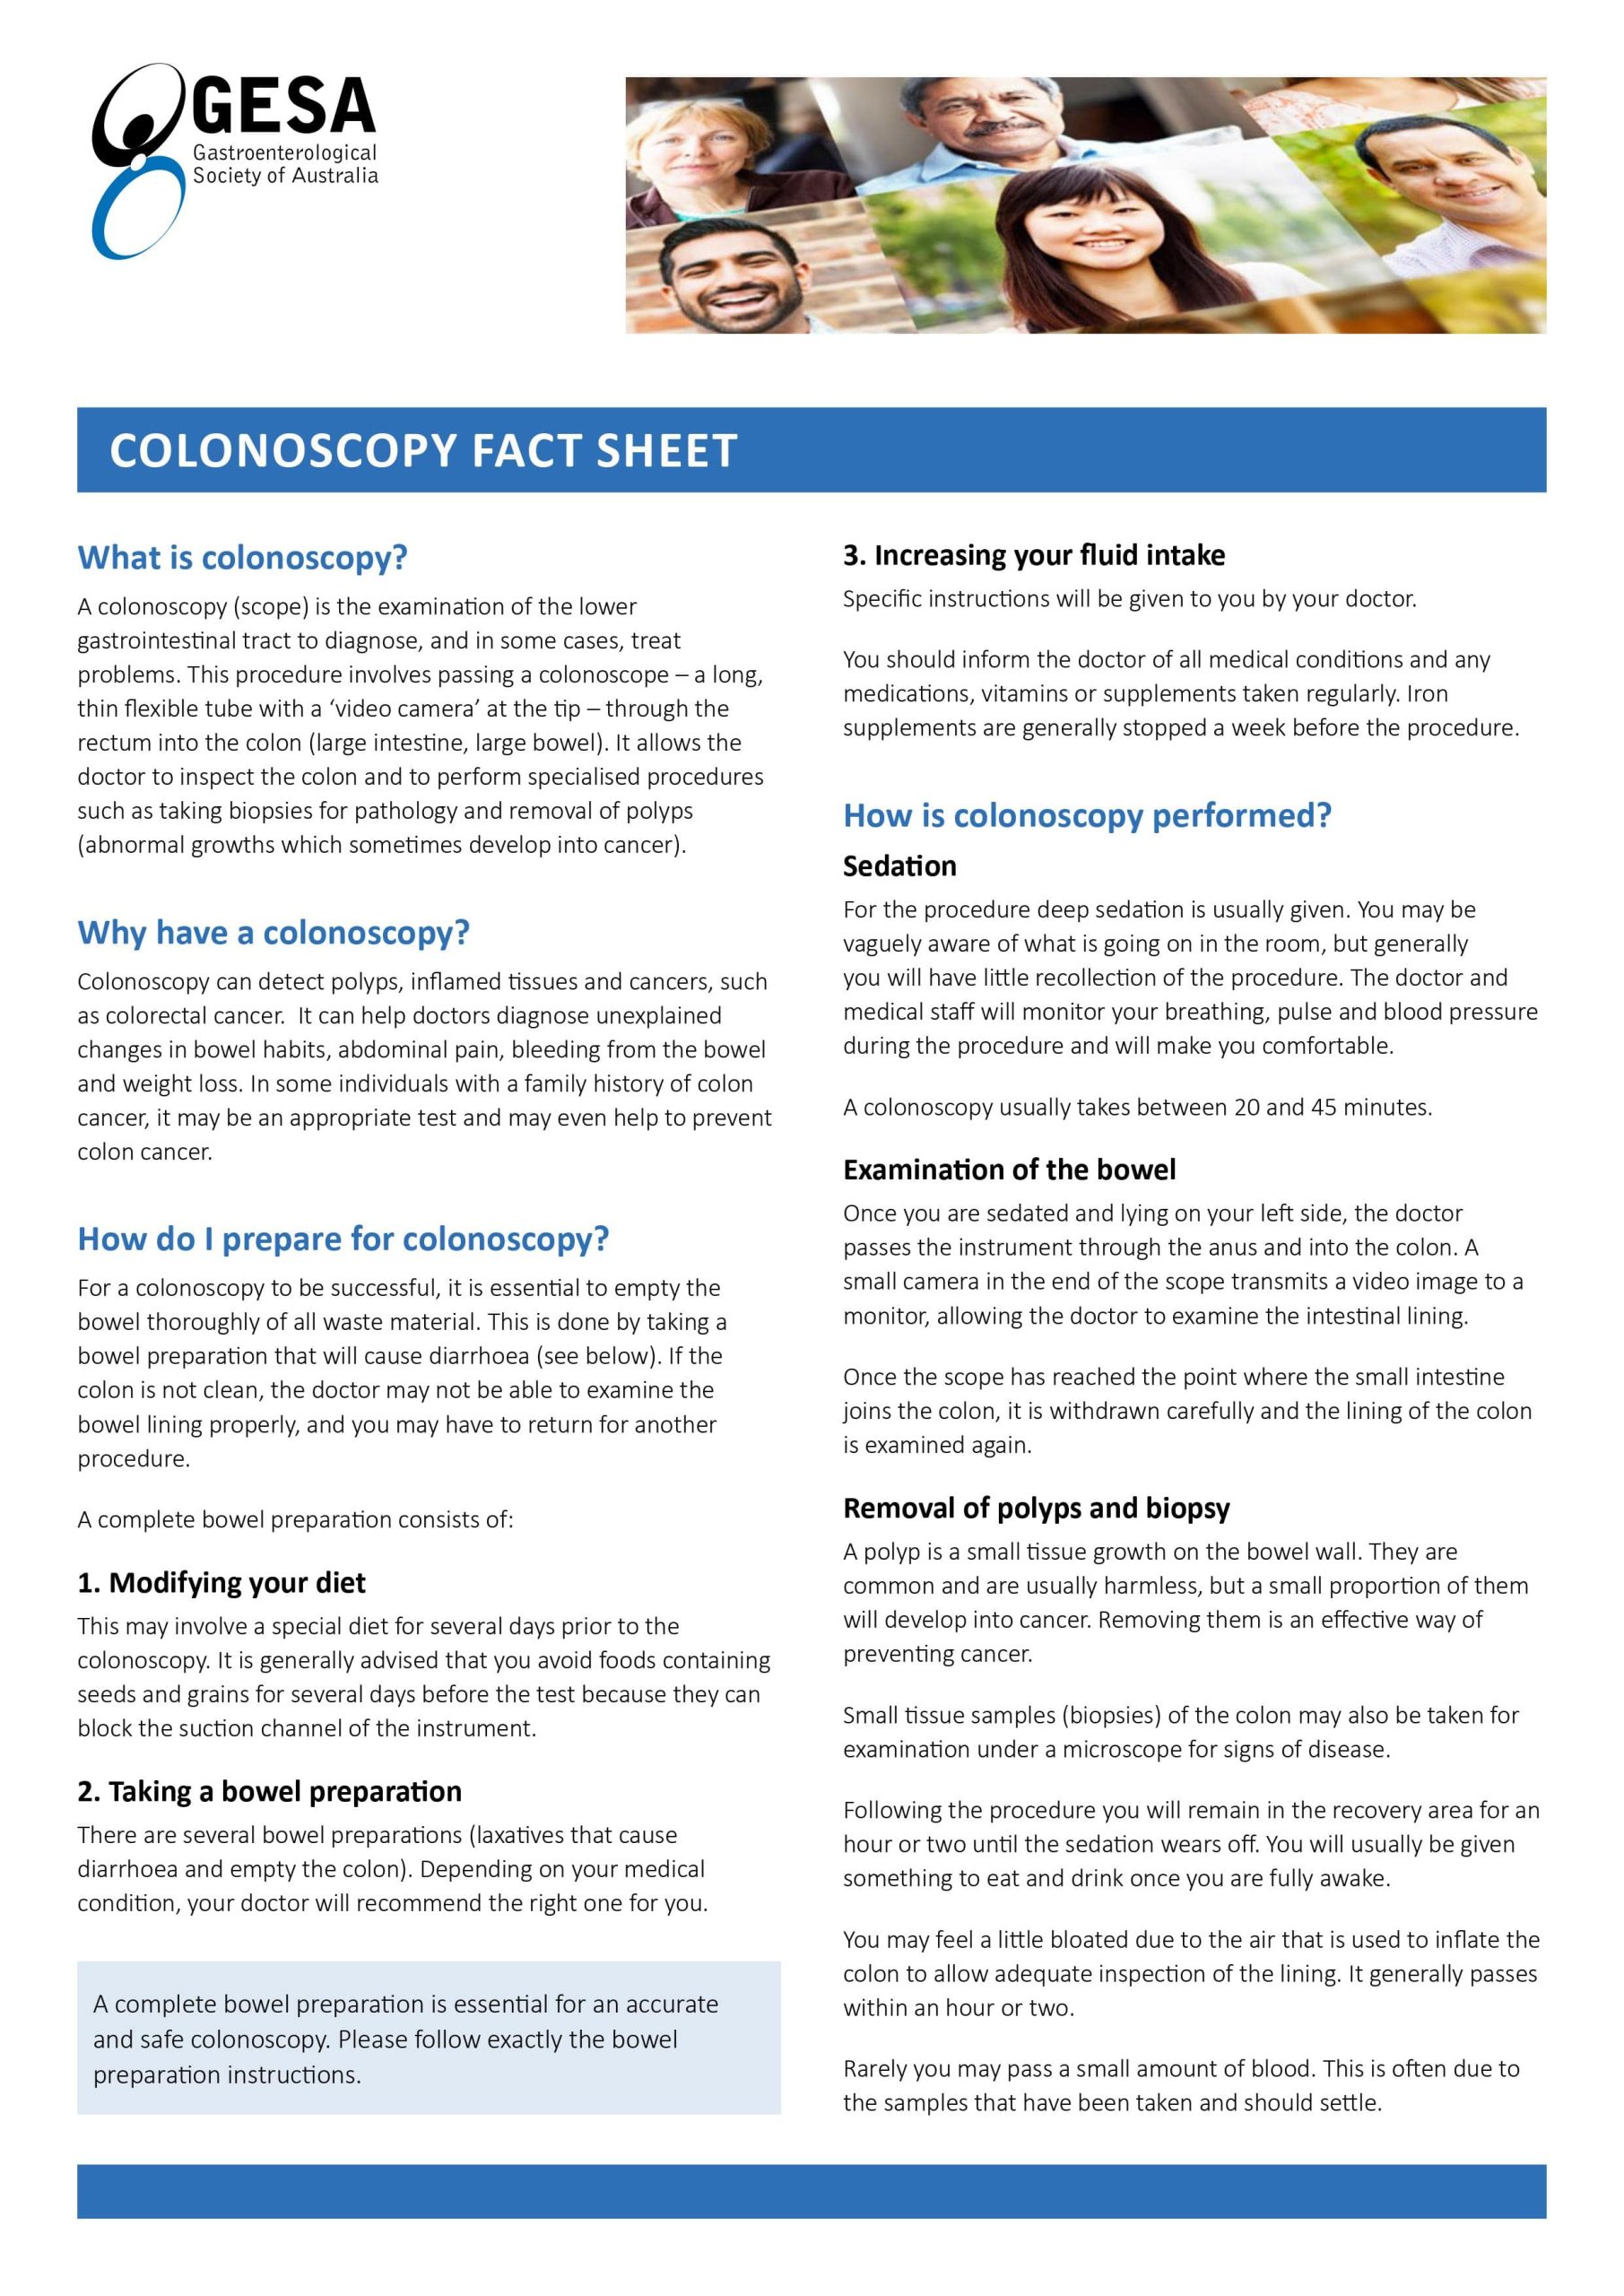 Colonoscopy Fact Sheet GESA